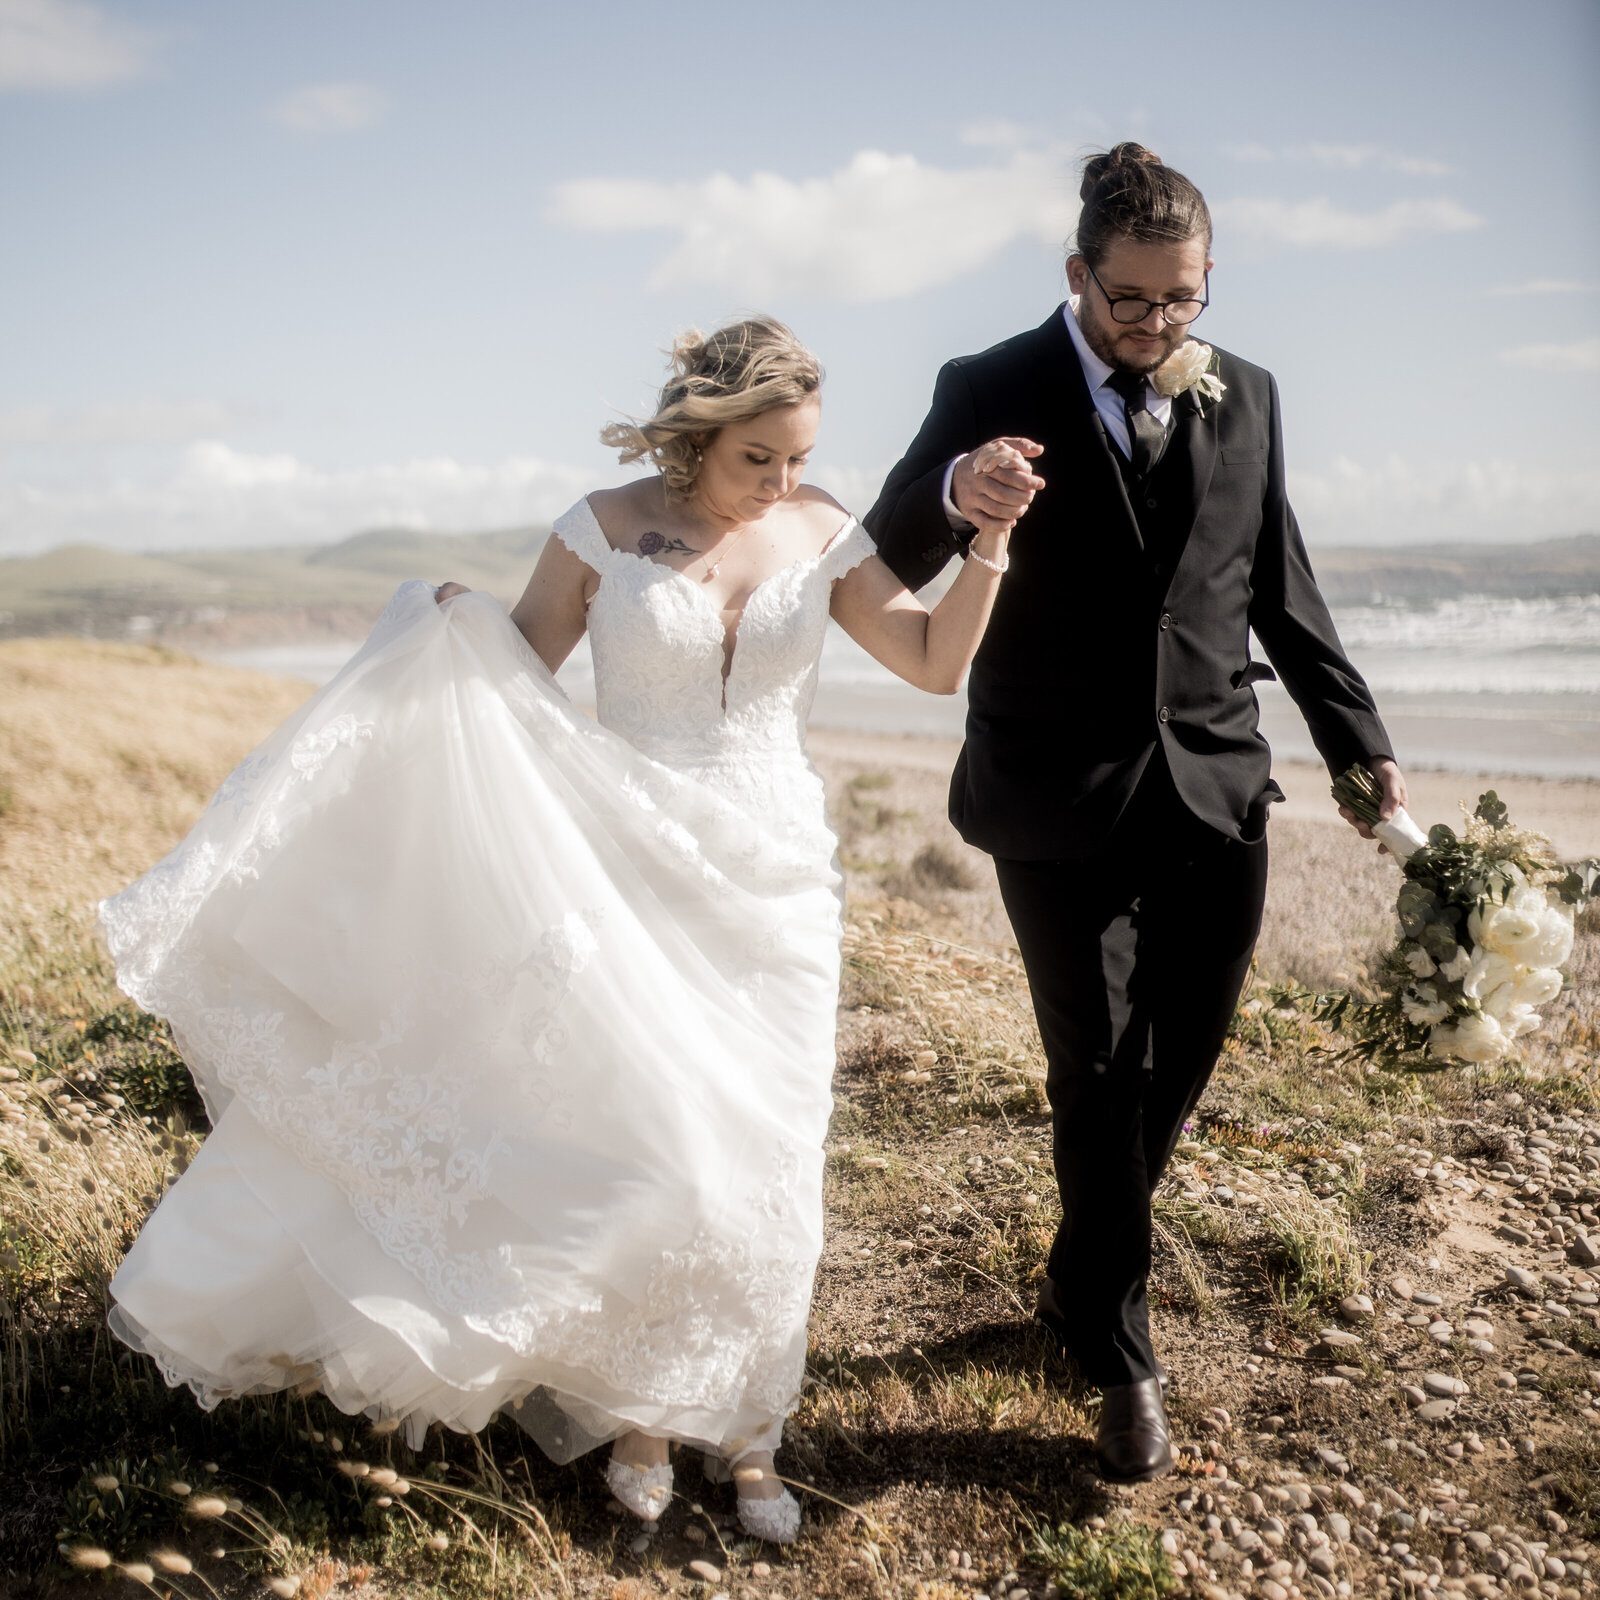 Maxine-Chris-Rexvil-Photography-Adelaide-Wedding-Photographer-422